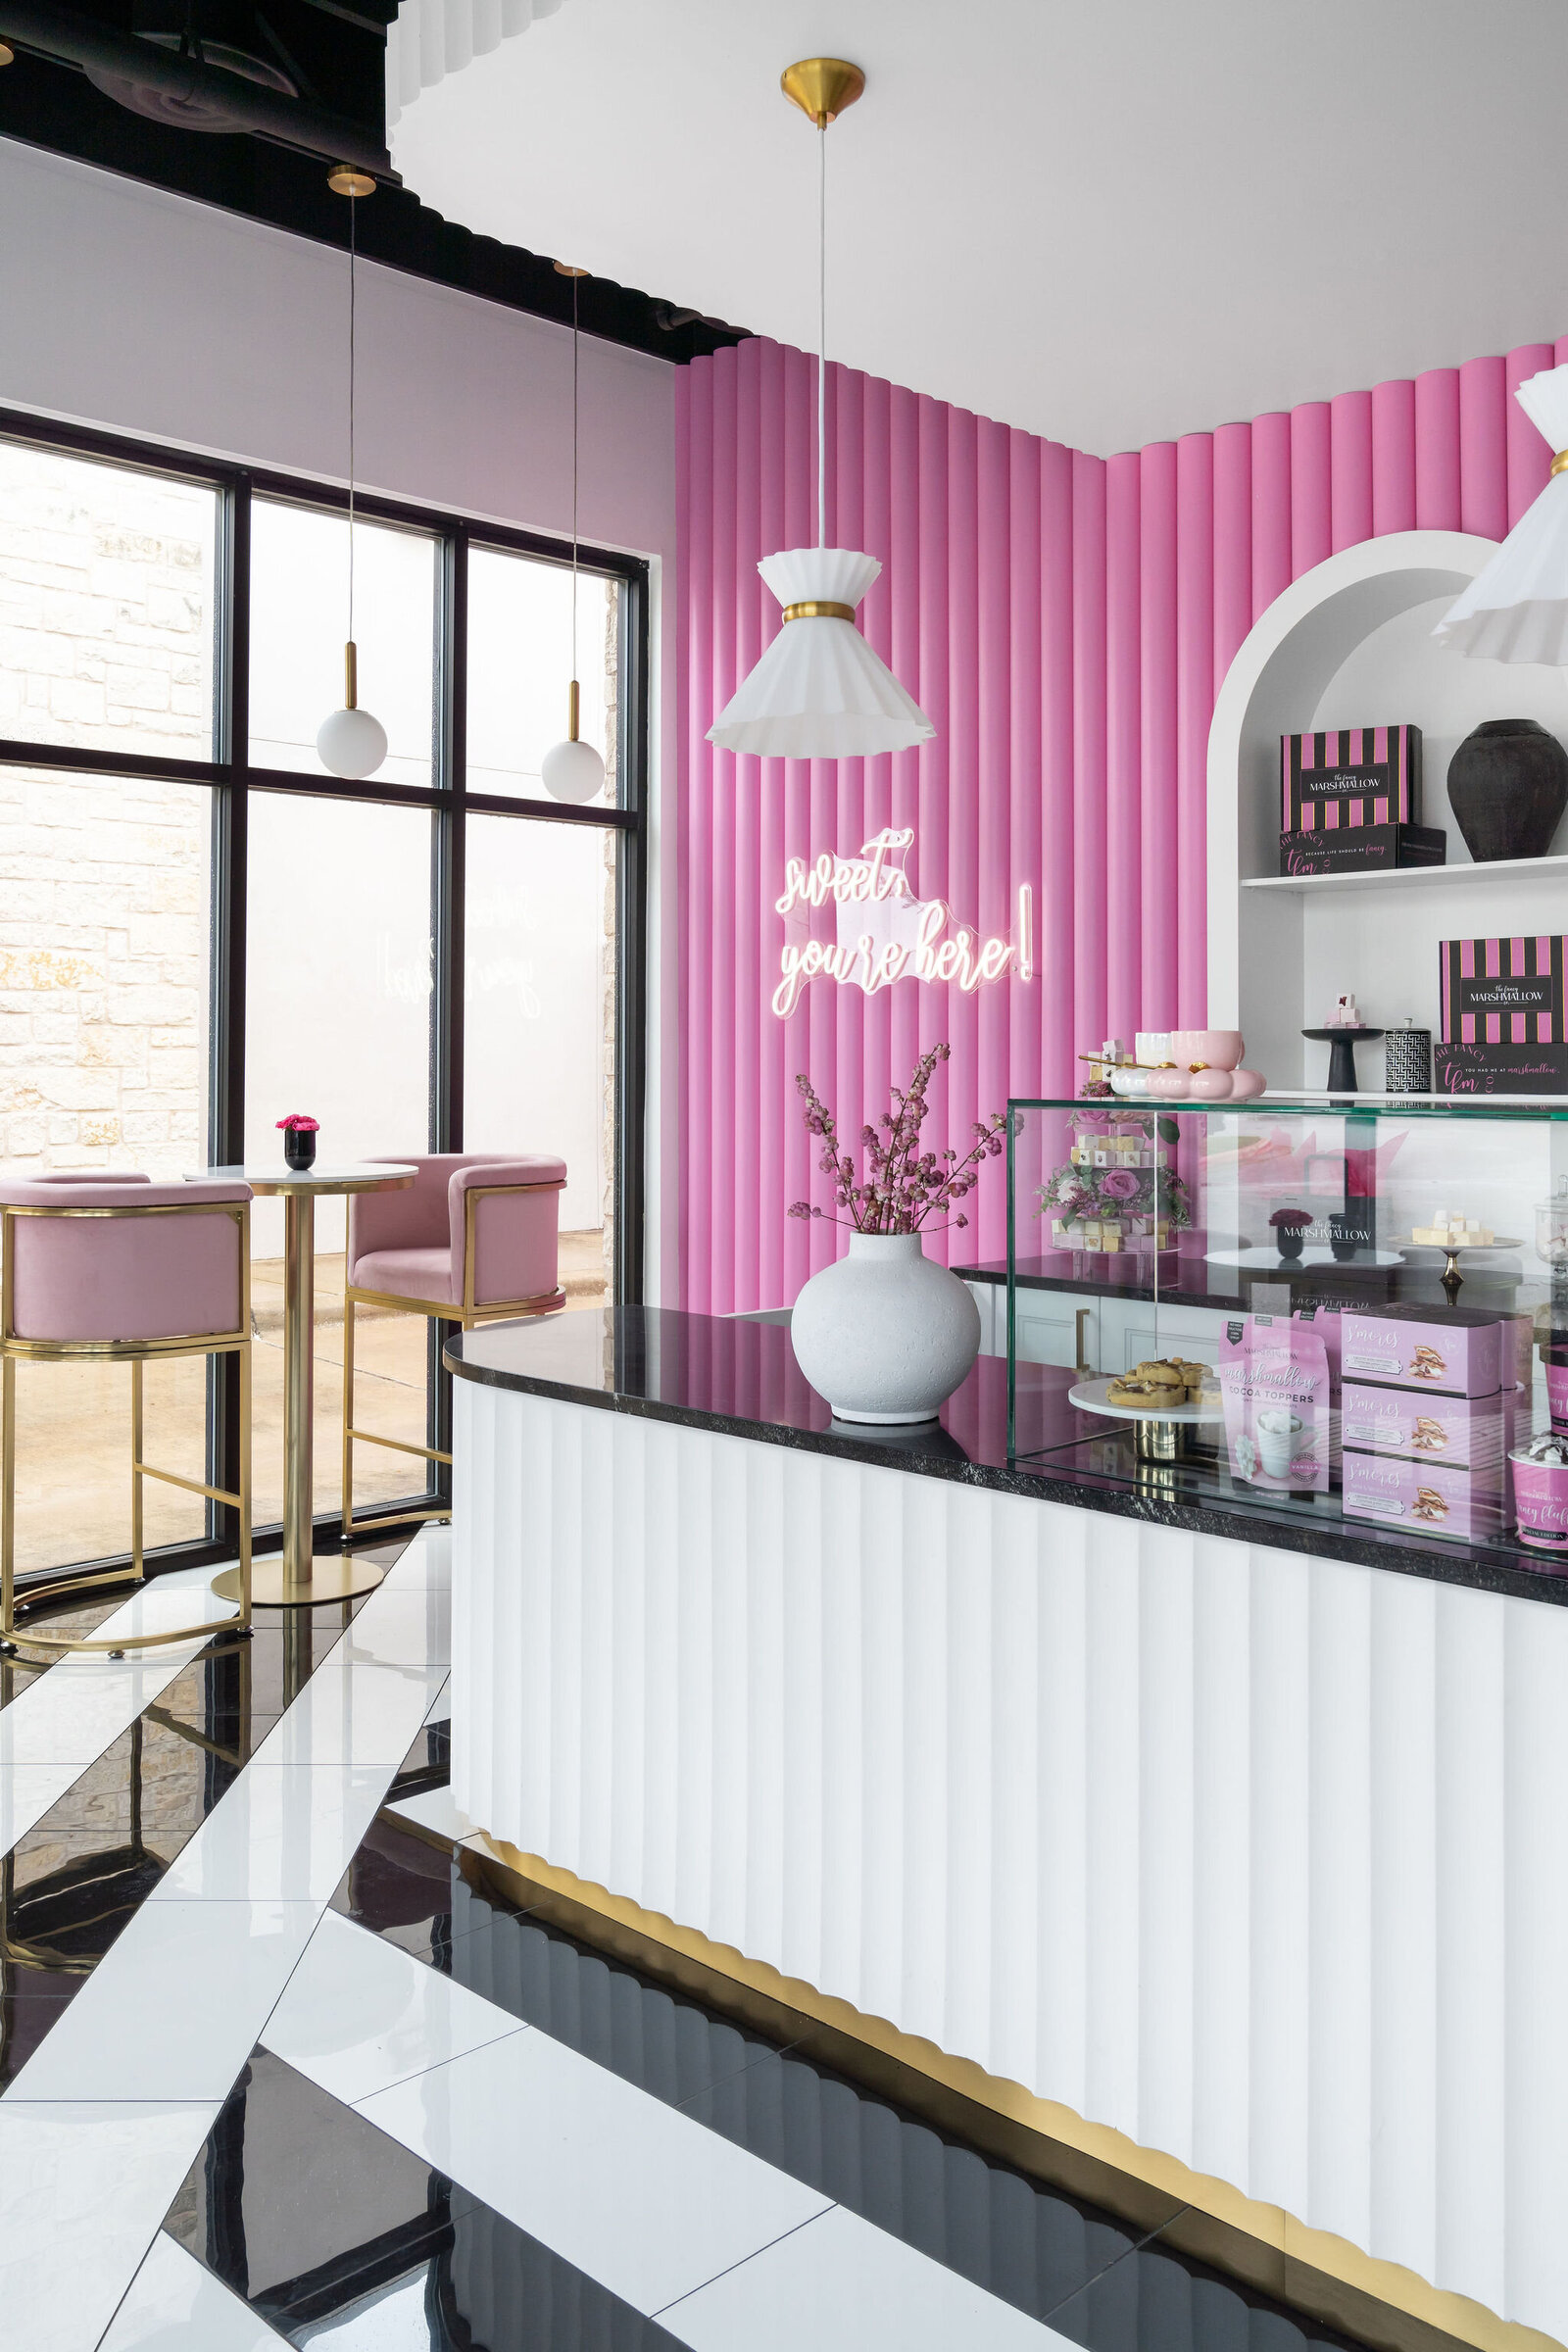 Nuela_Designs_Retail_Interior_Design_Pink_Black_White_Bakery